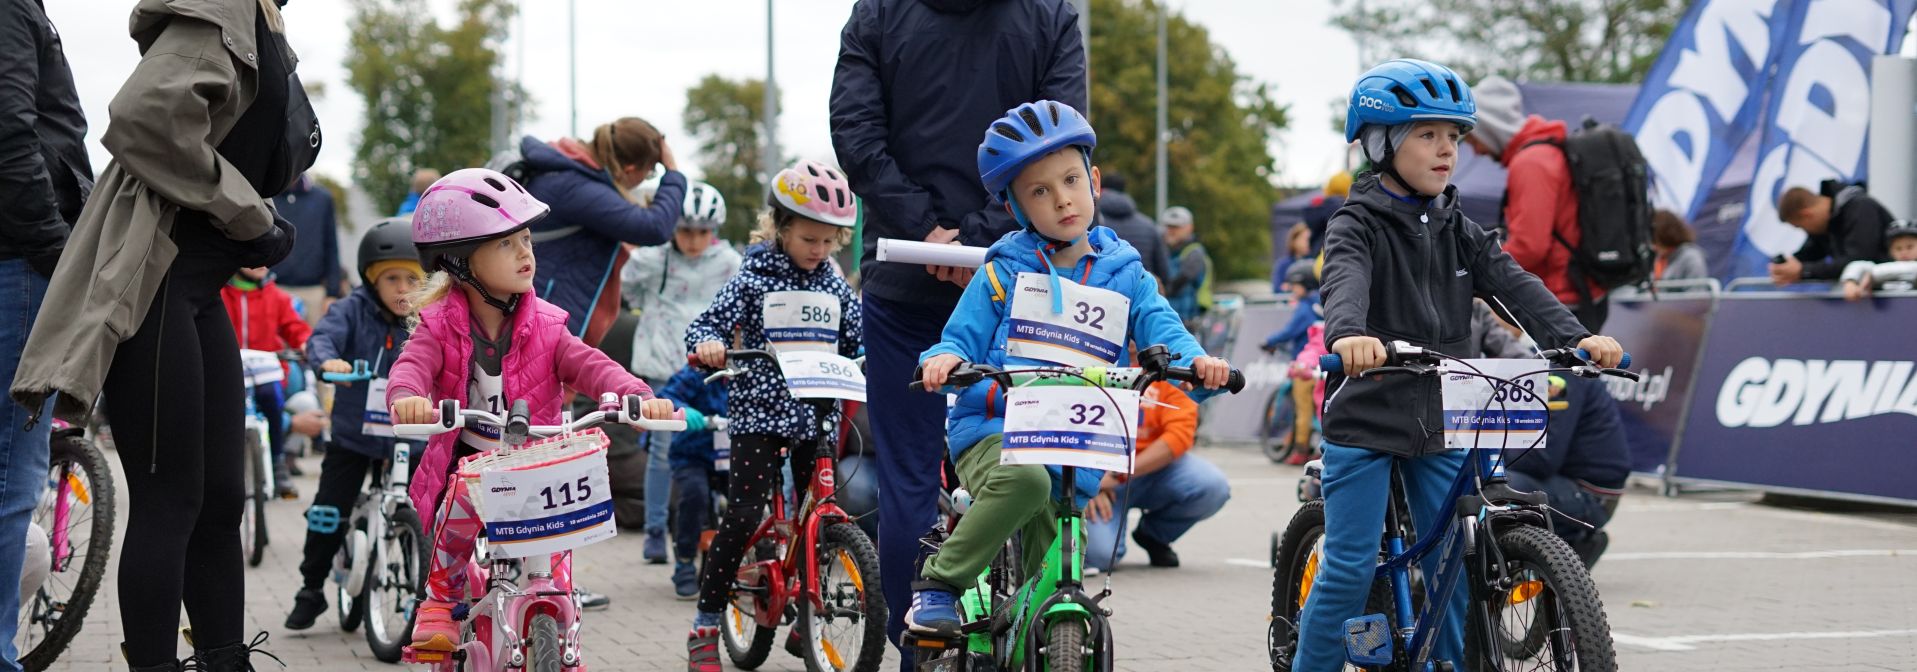 Dzieci na rowerkach 